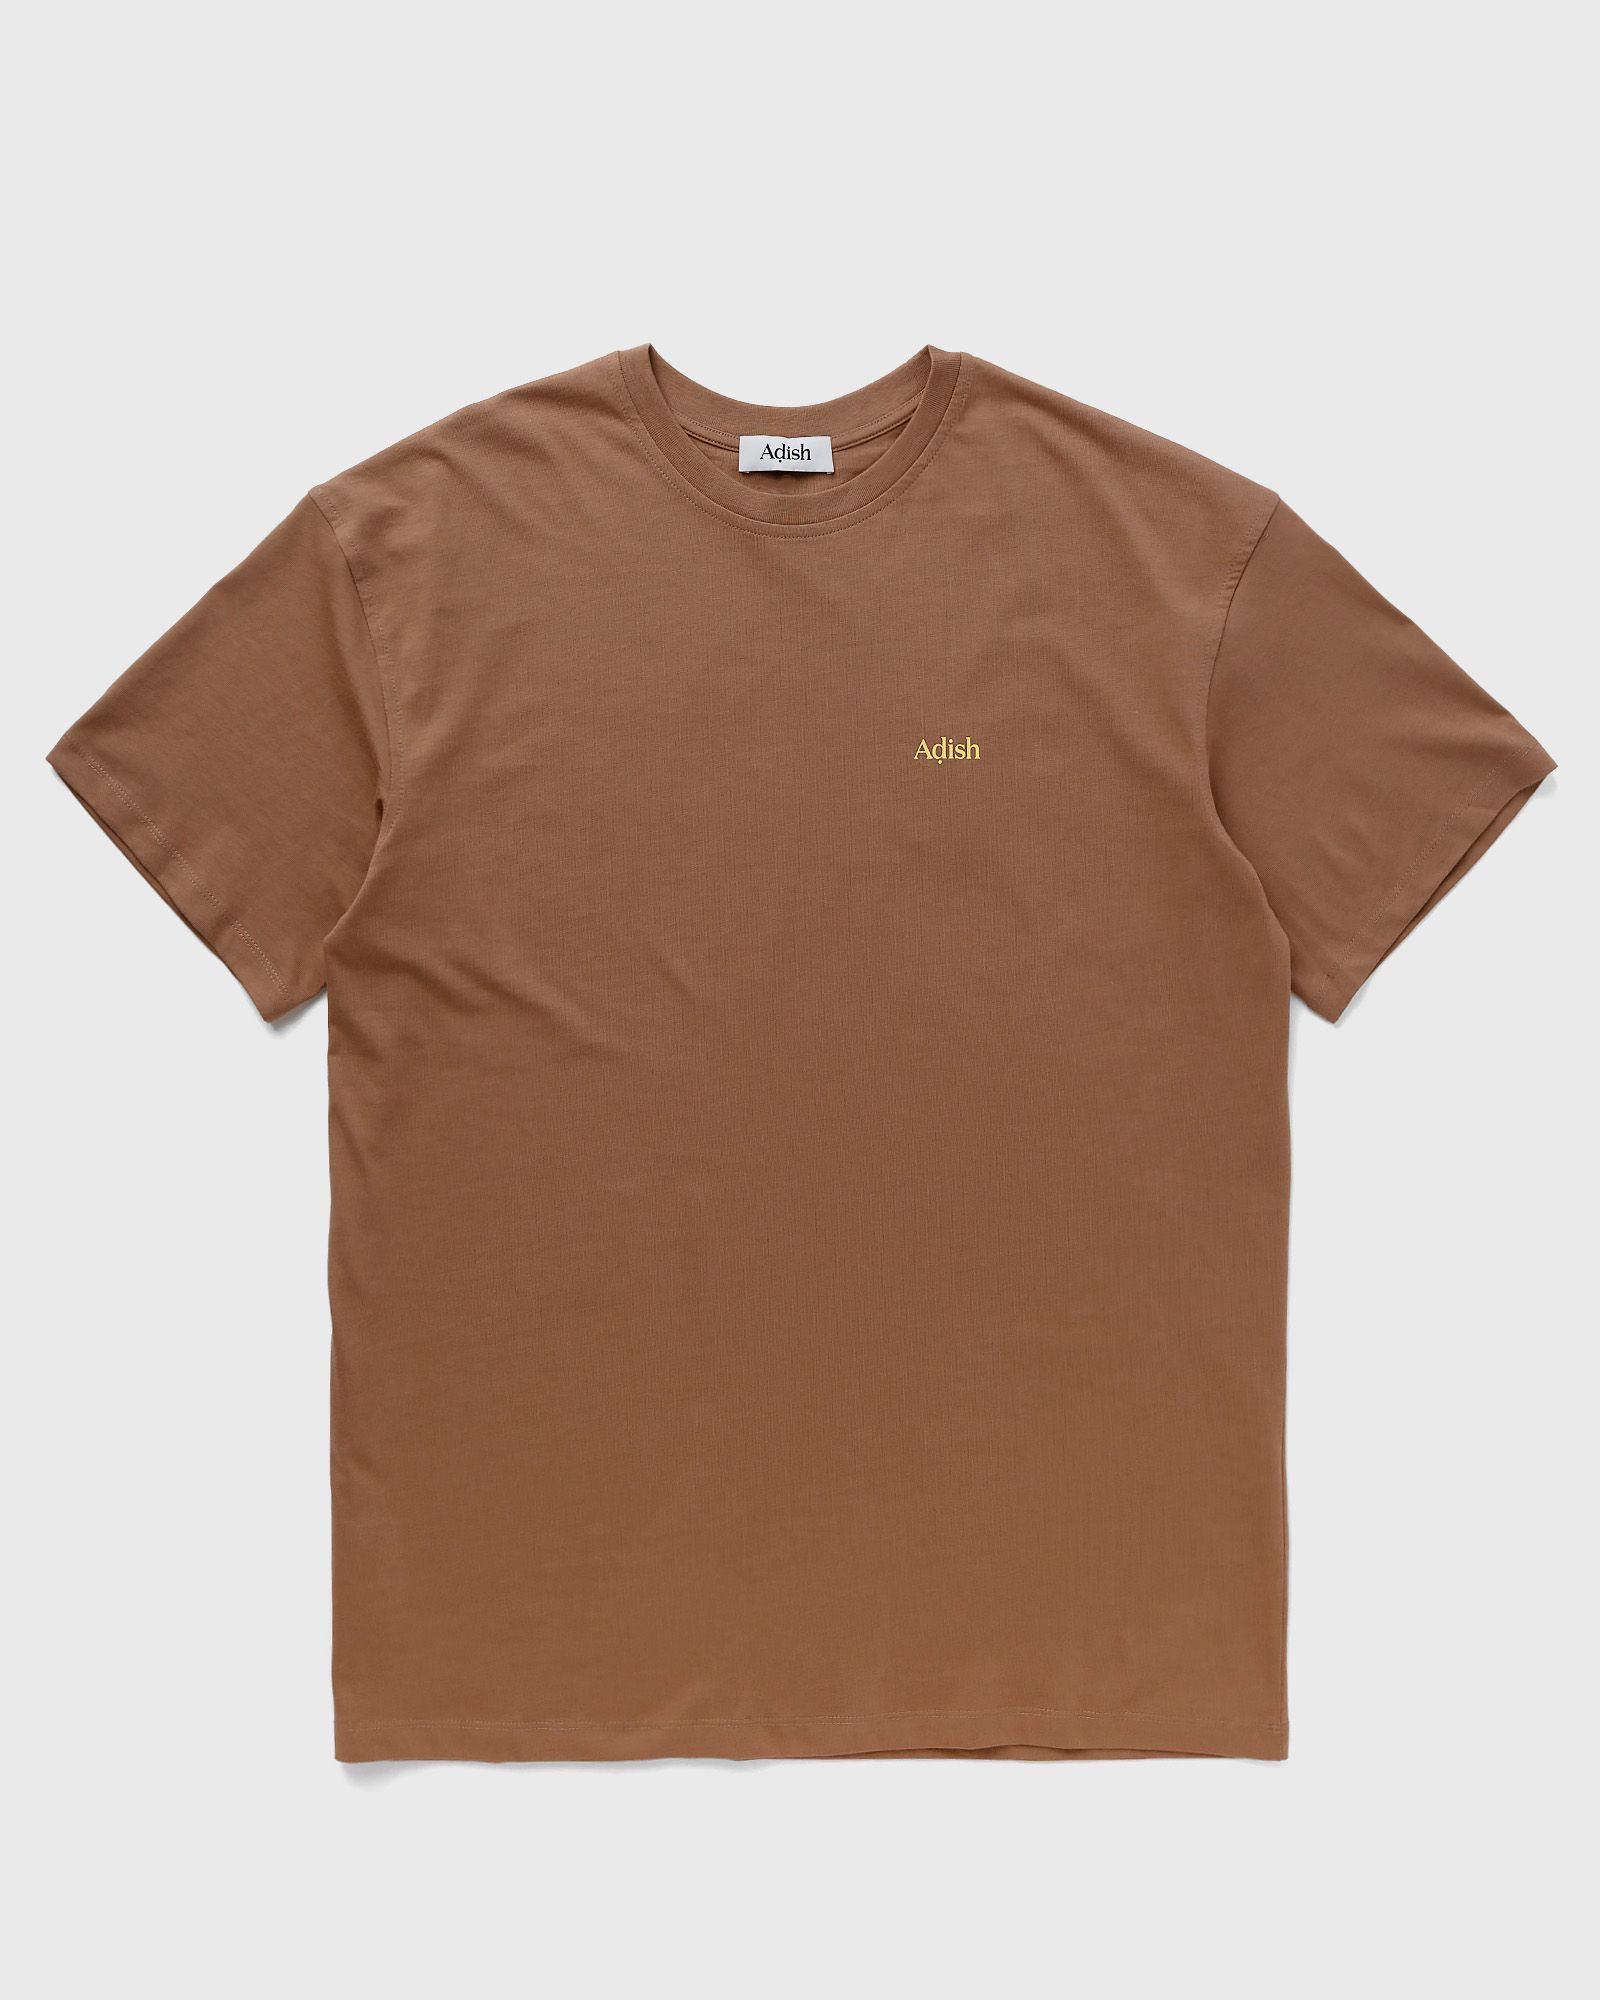 ADISH - short sleeve zeytoon logo t-shirt men shortsleeves brown in größe:xxl